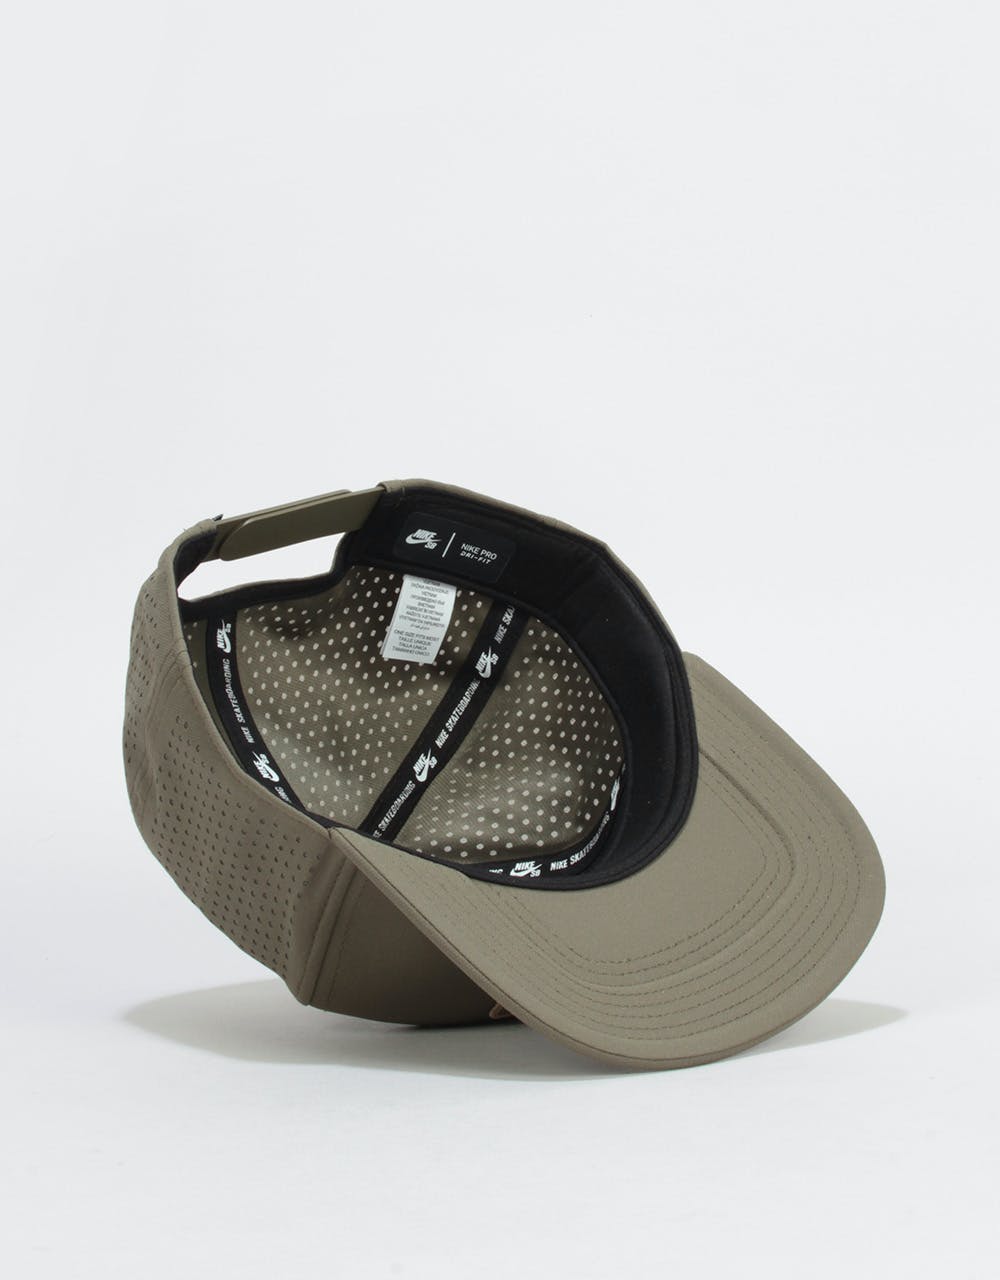 Nike SB Aerobill Pro 2.0 Snapback Cap - Medium Olive/Black